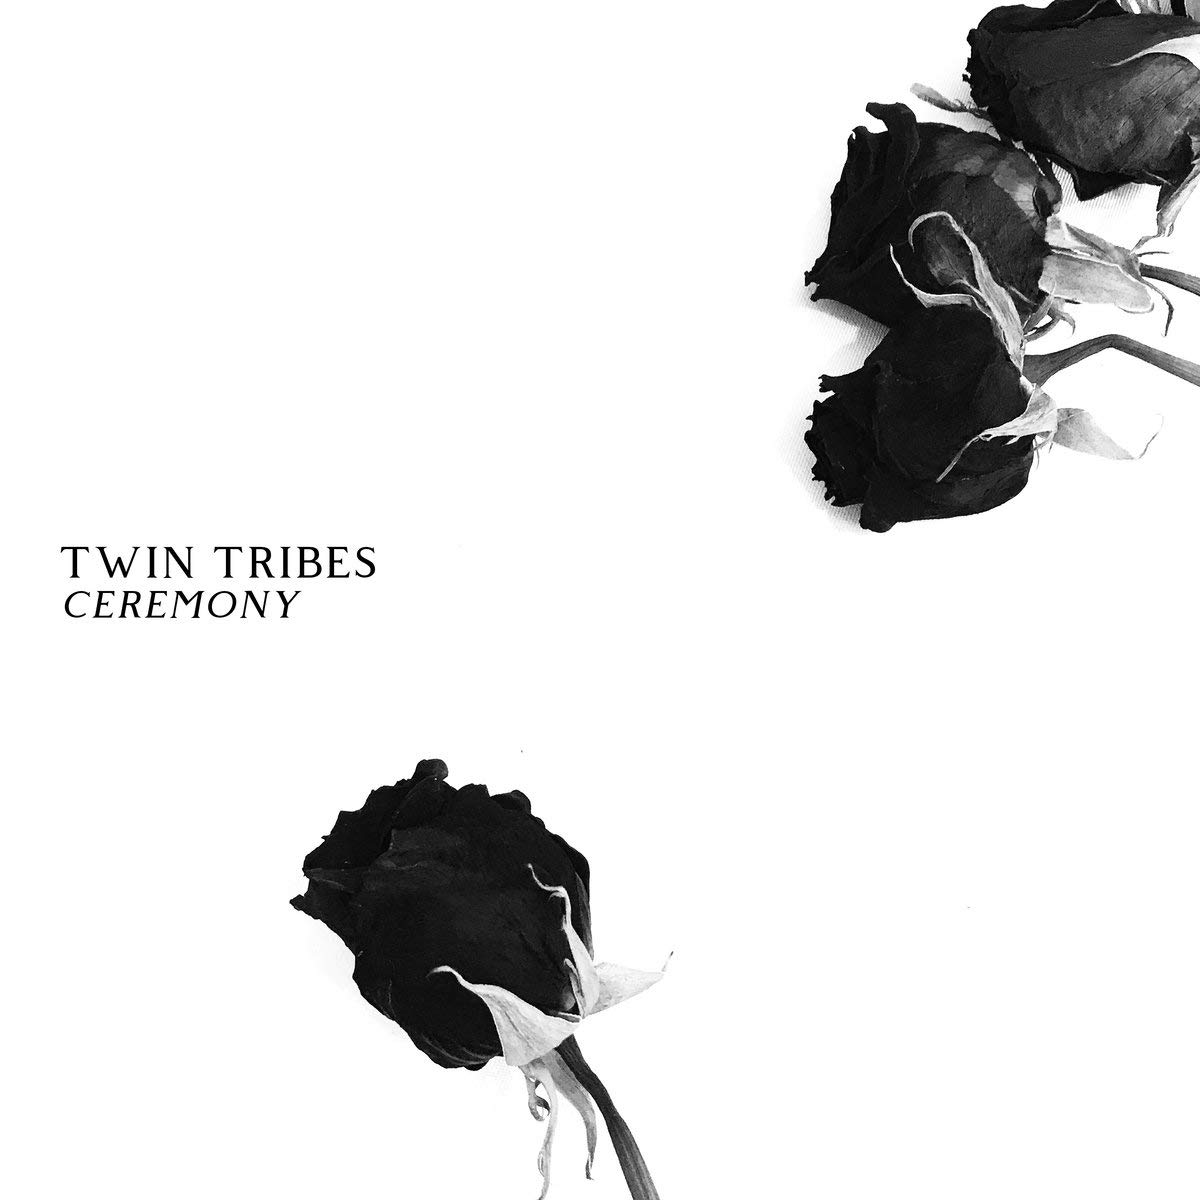 Twin Tribes - Fantasmas